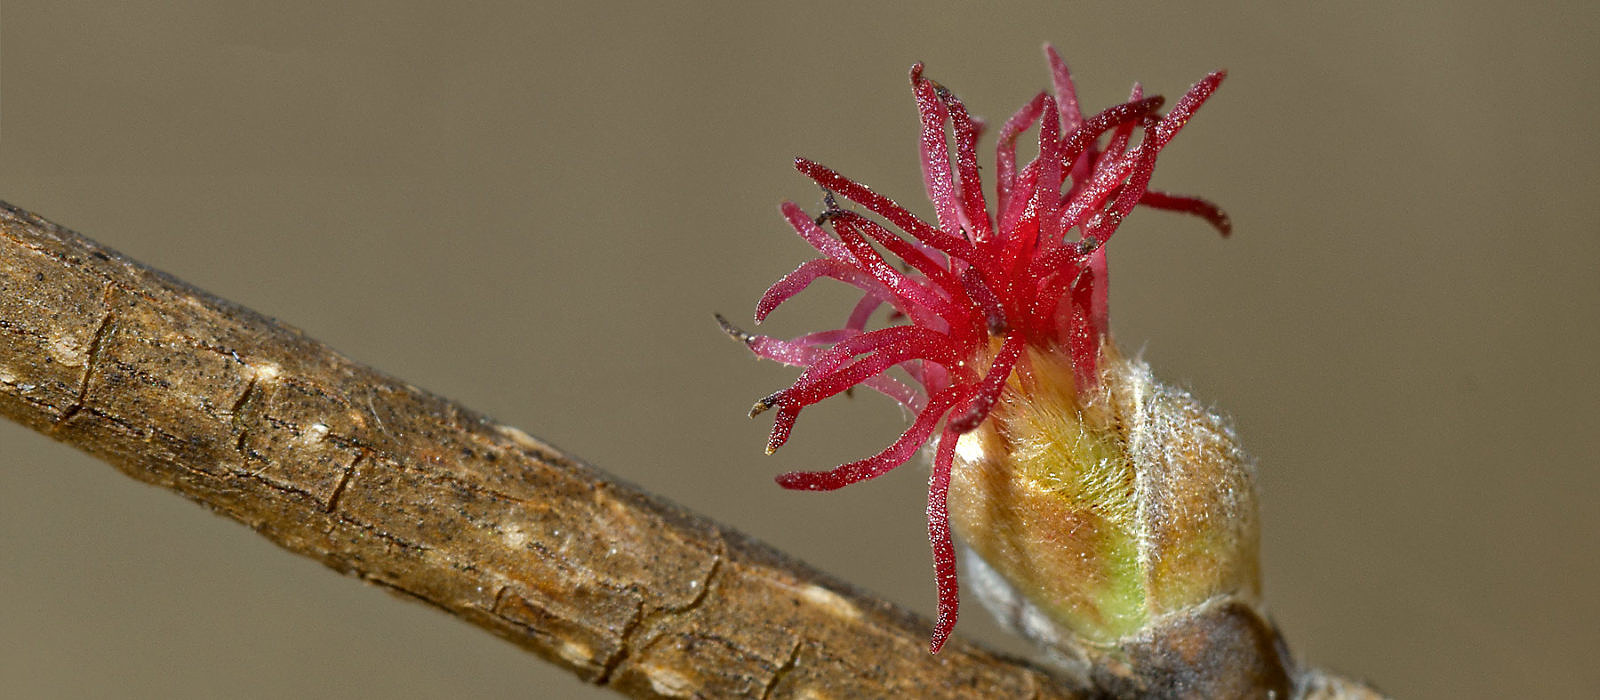 Beaked Hazelnut flower by Bryan Pfeiffer